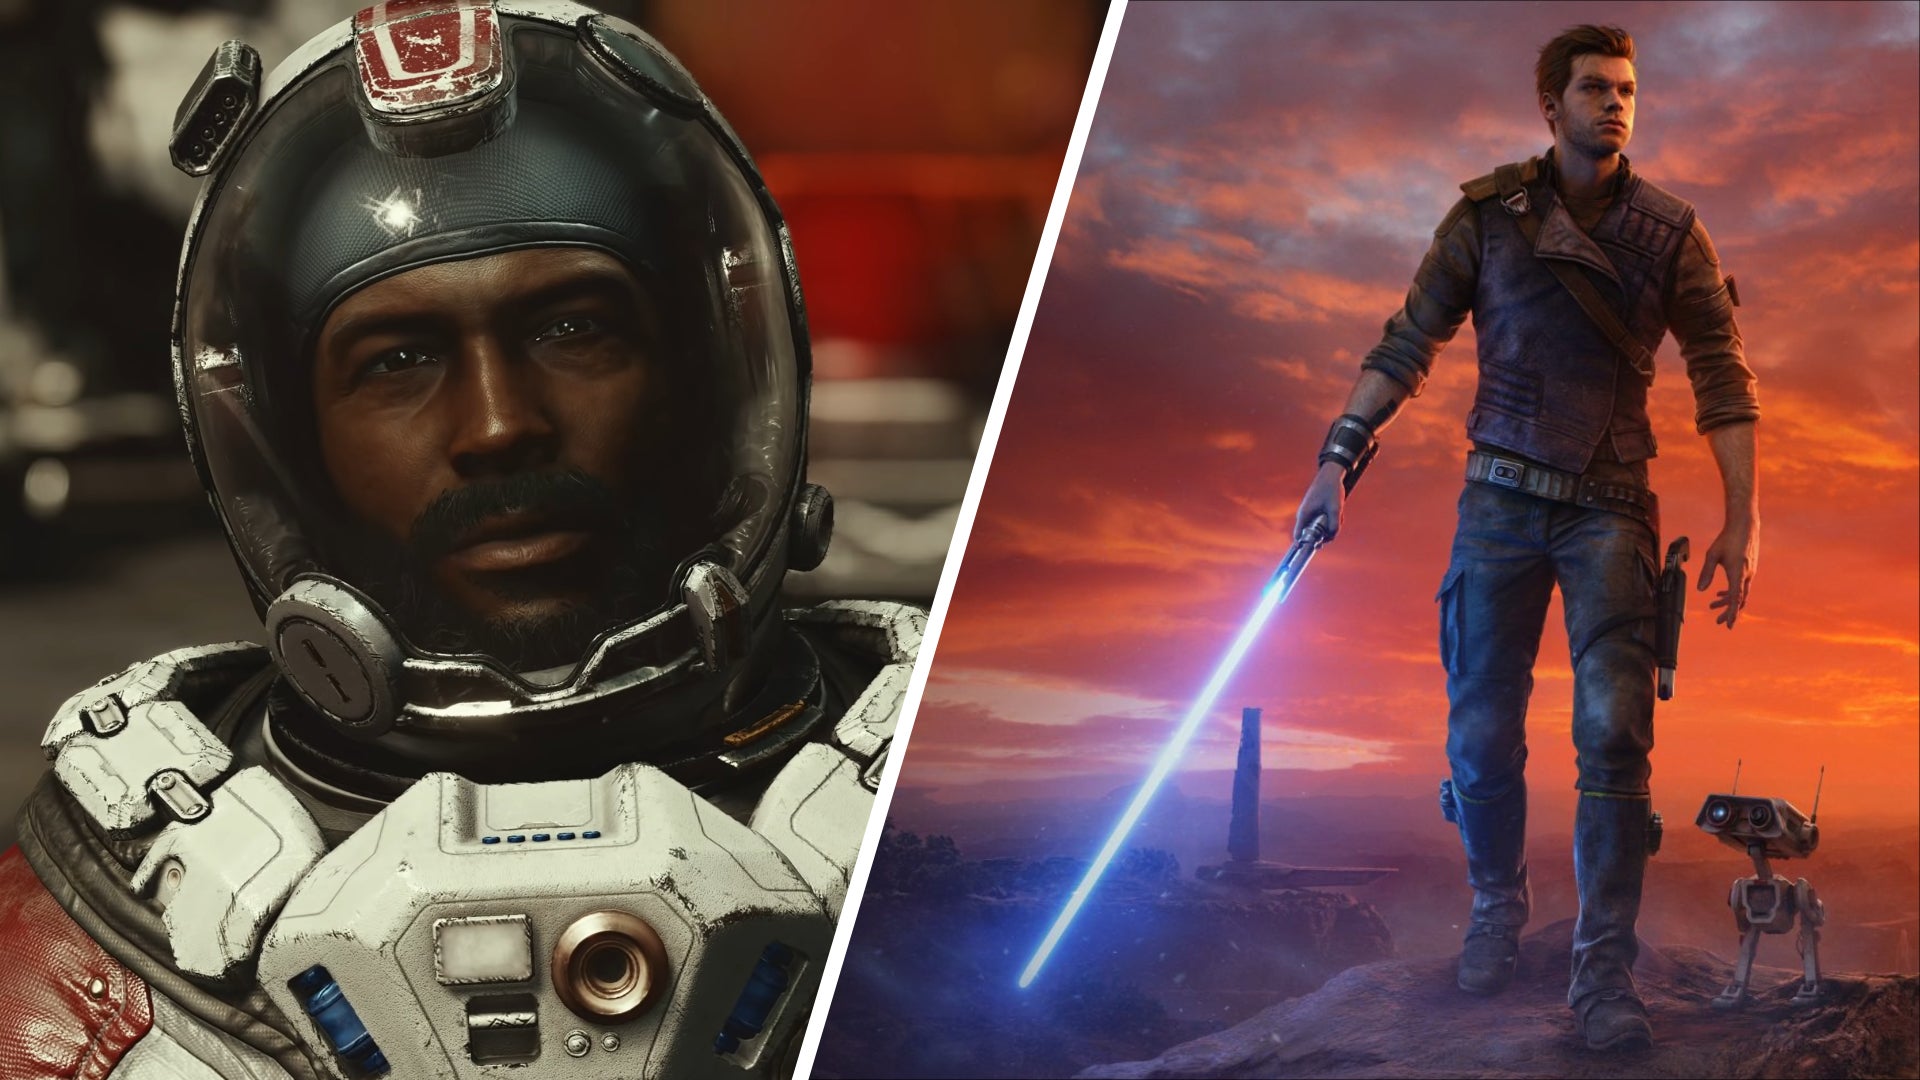 Left: a Starfield NPC wearing a helmet looks into the camera. Right: Cal Kestis ignites his lightsaber in Star Wars Jedi: Survivor.